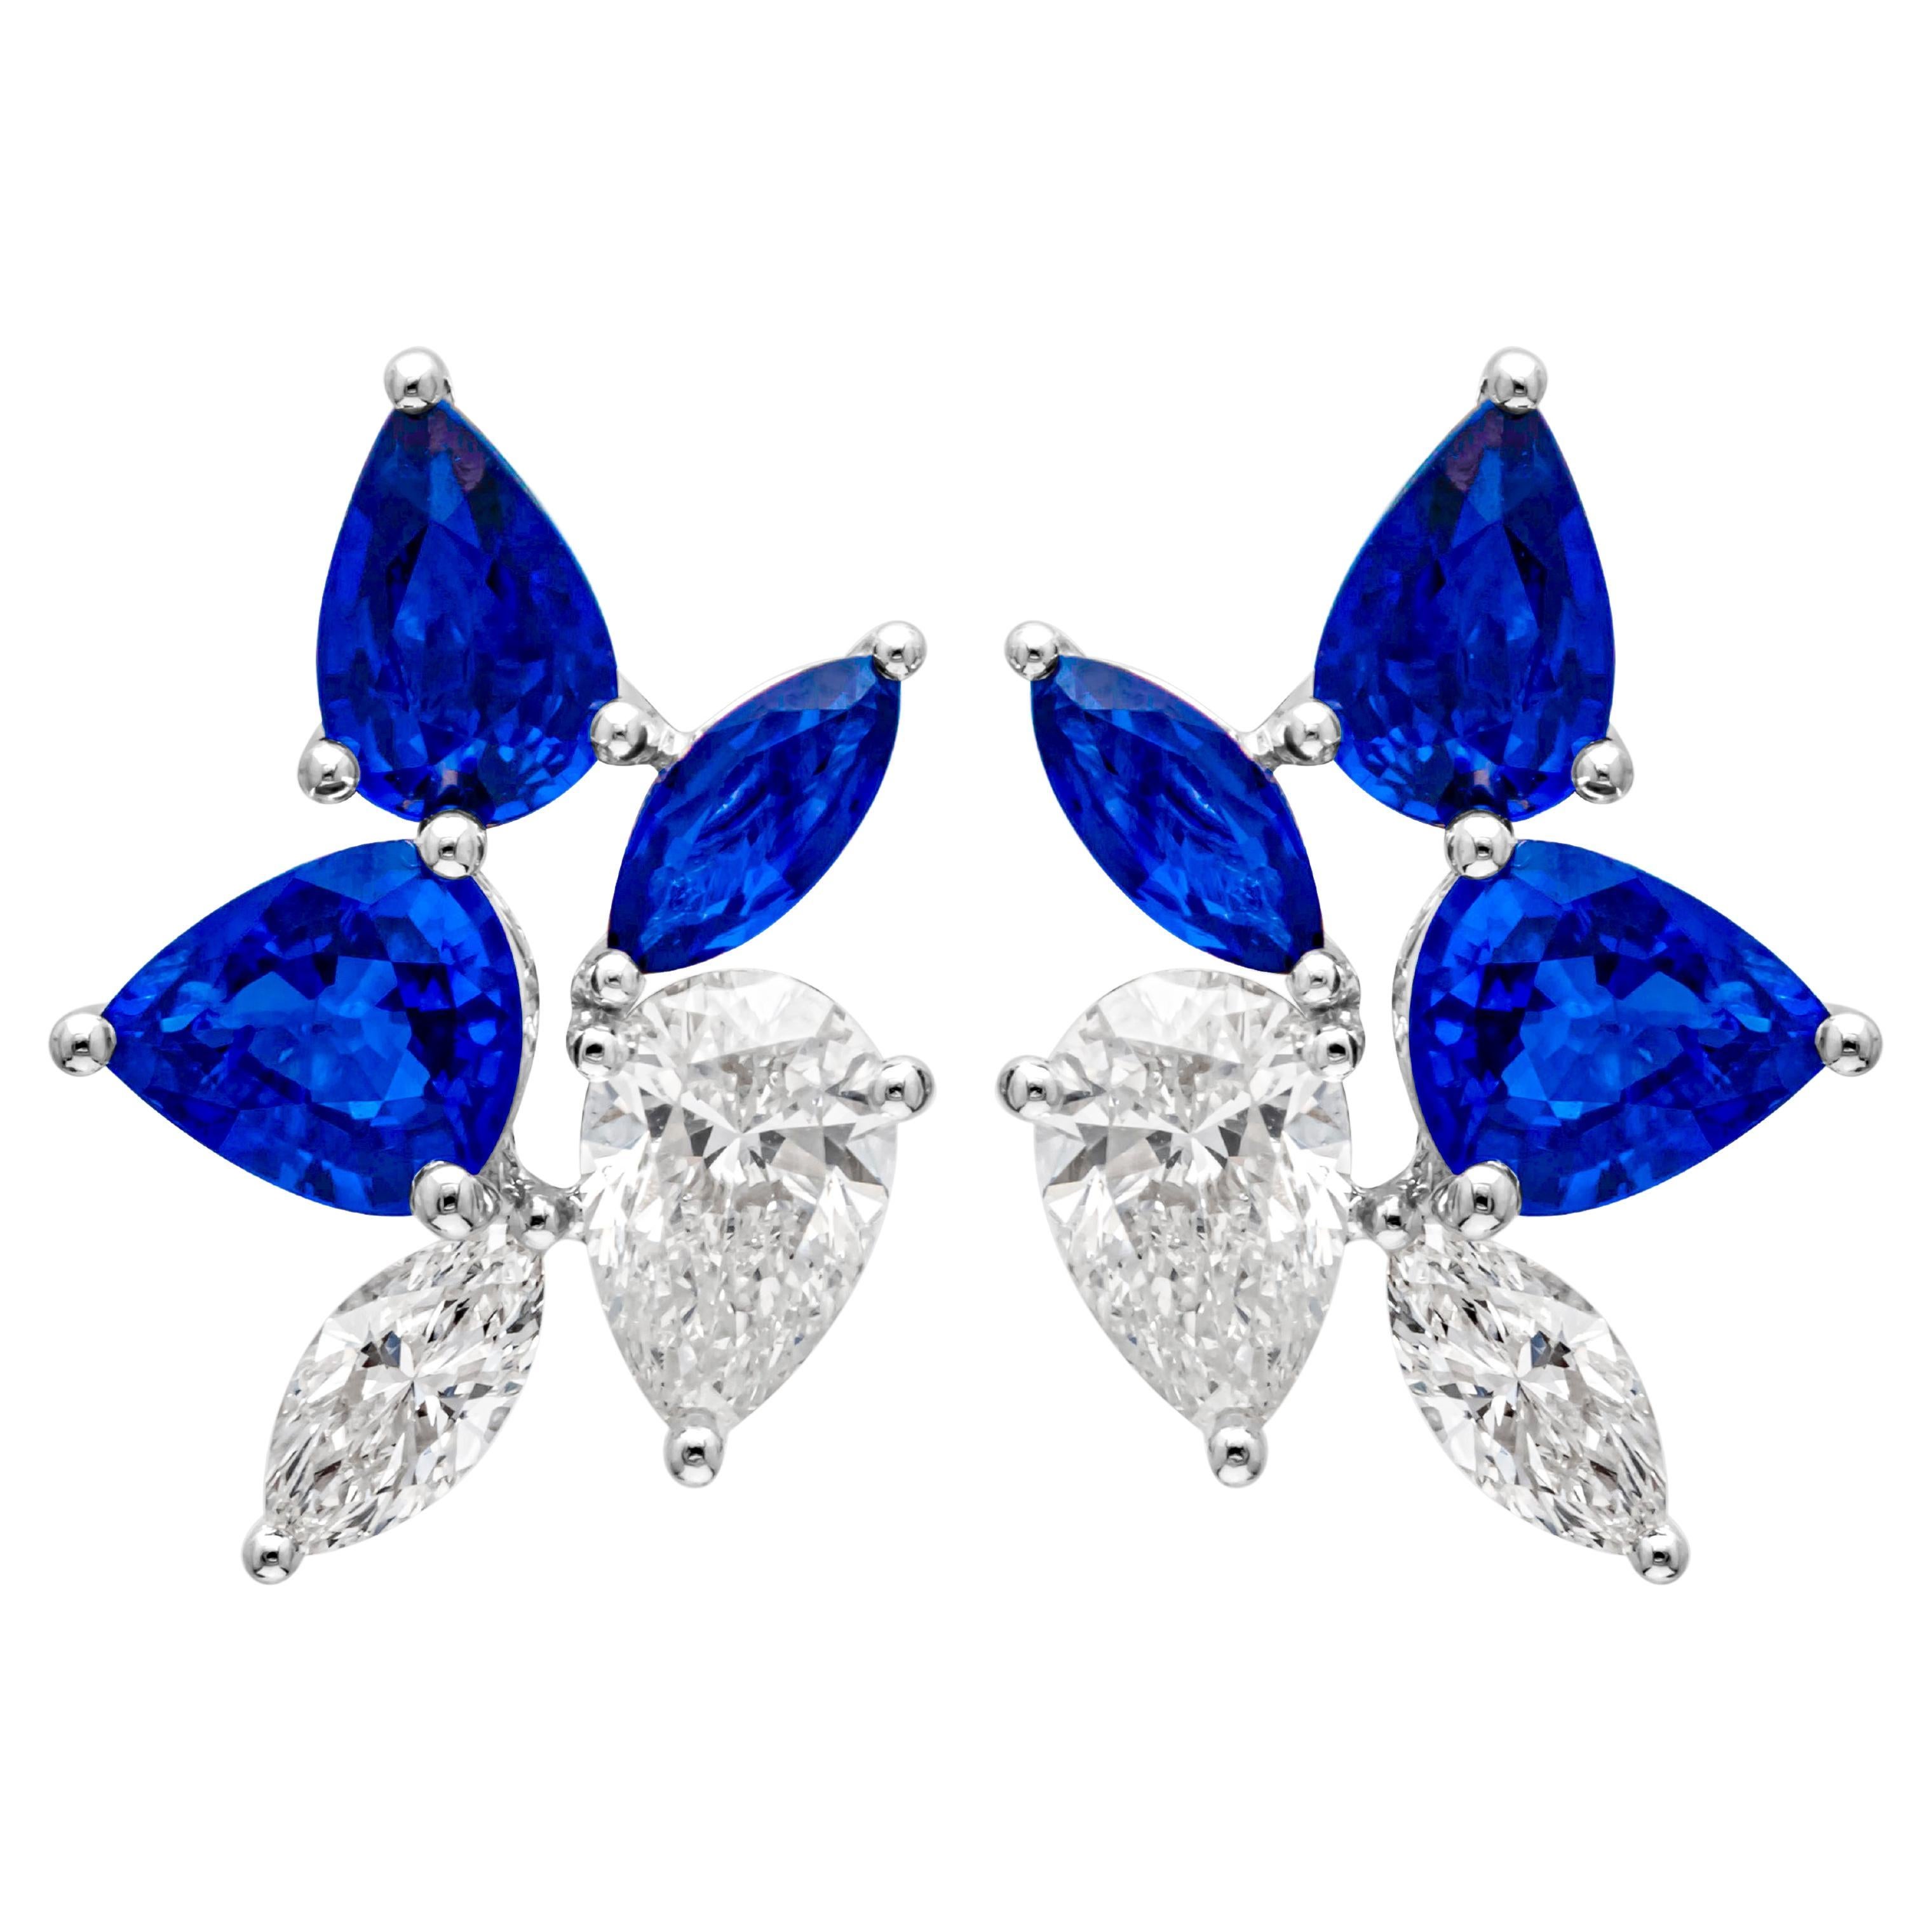 4.08 Carats Total Mixed Cut Blue Sapphire & Diamond Stud Earrings